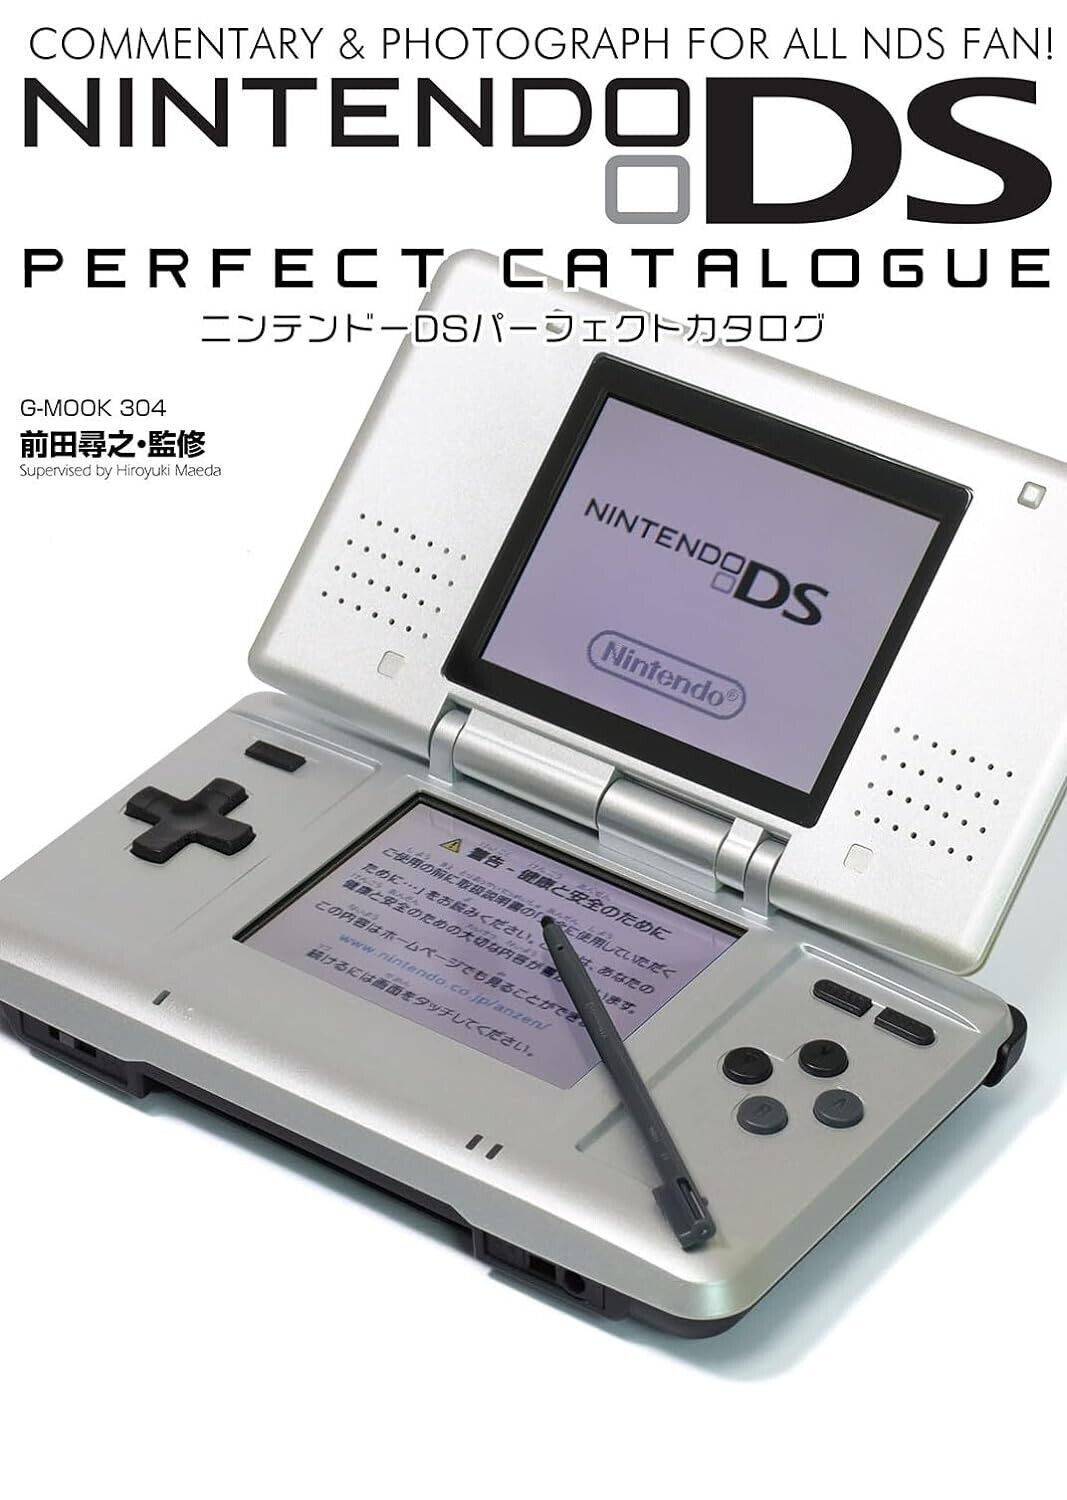 Nintendo DS Perfect Catalogue | JAPAN Game Fan Book